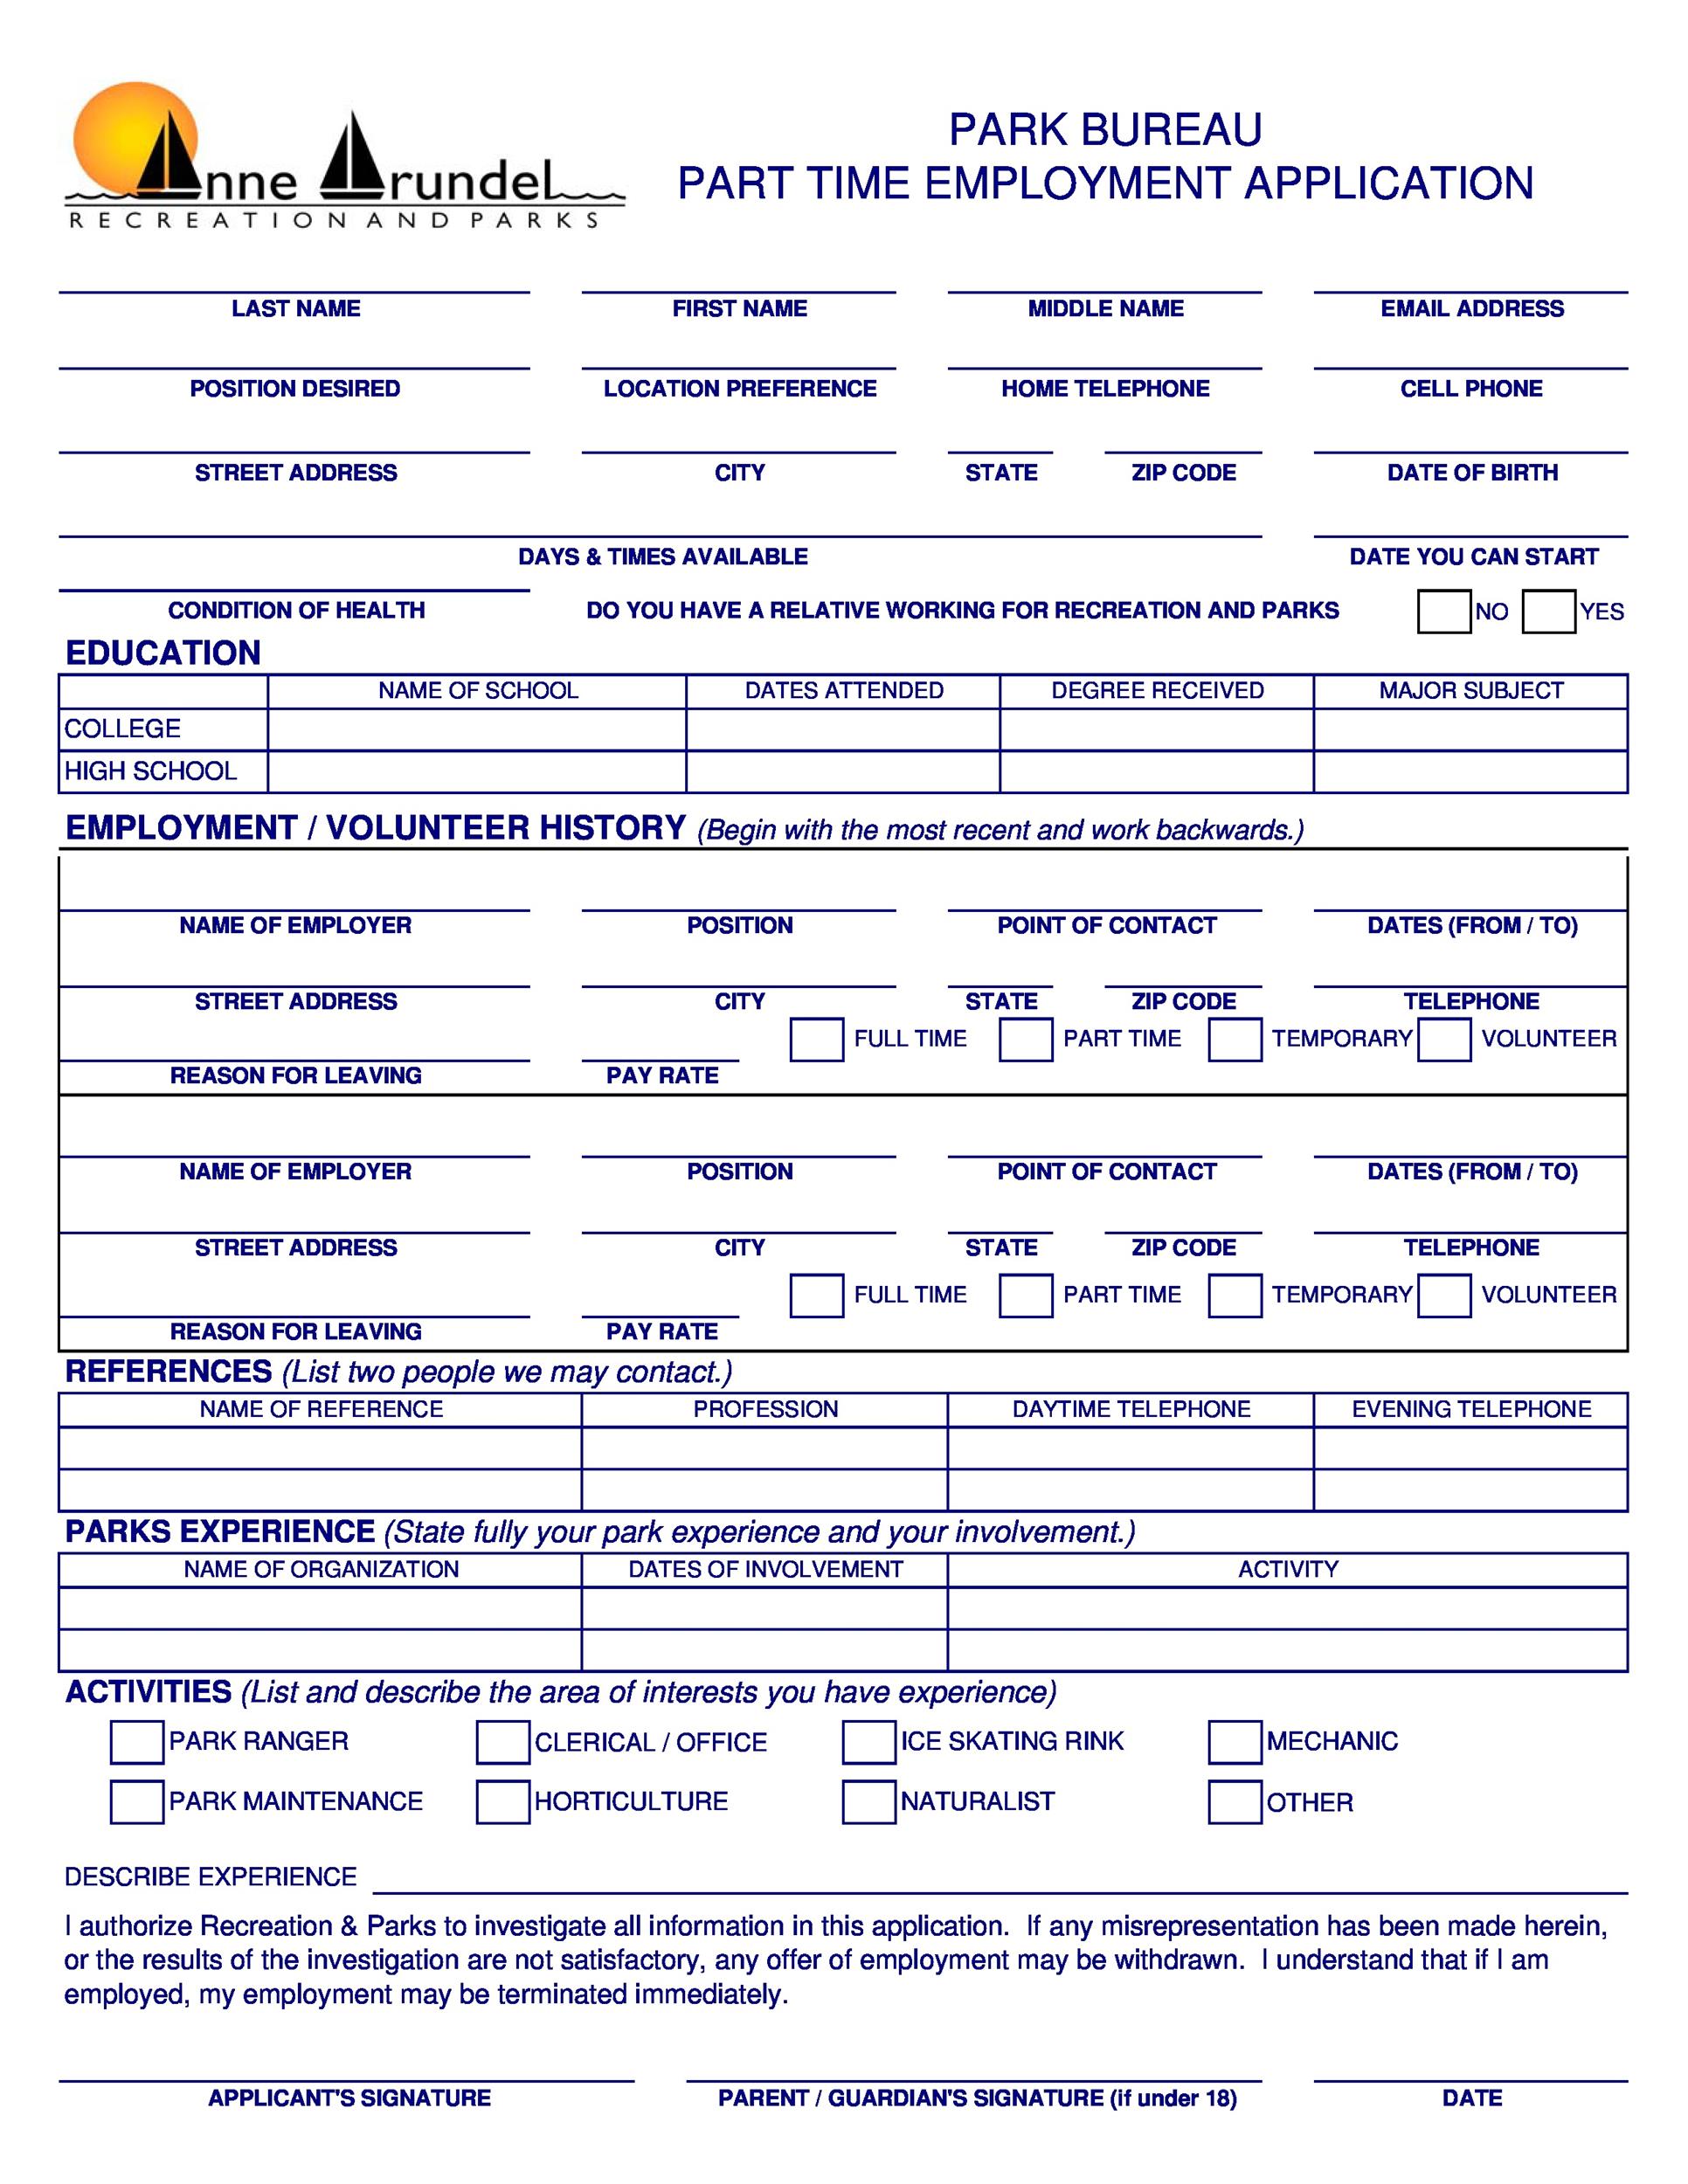 50-free-employment-job-application-form-templates-printable-templatelab